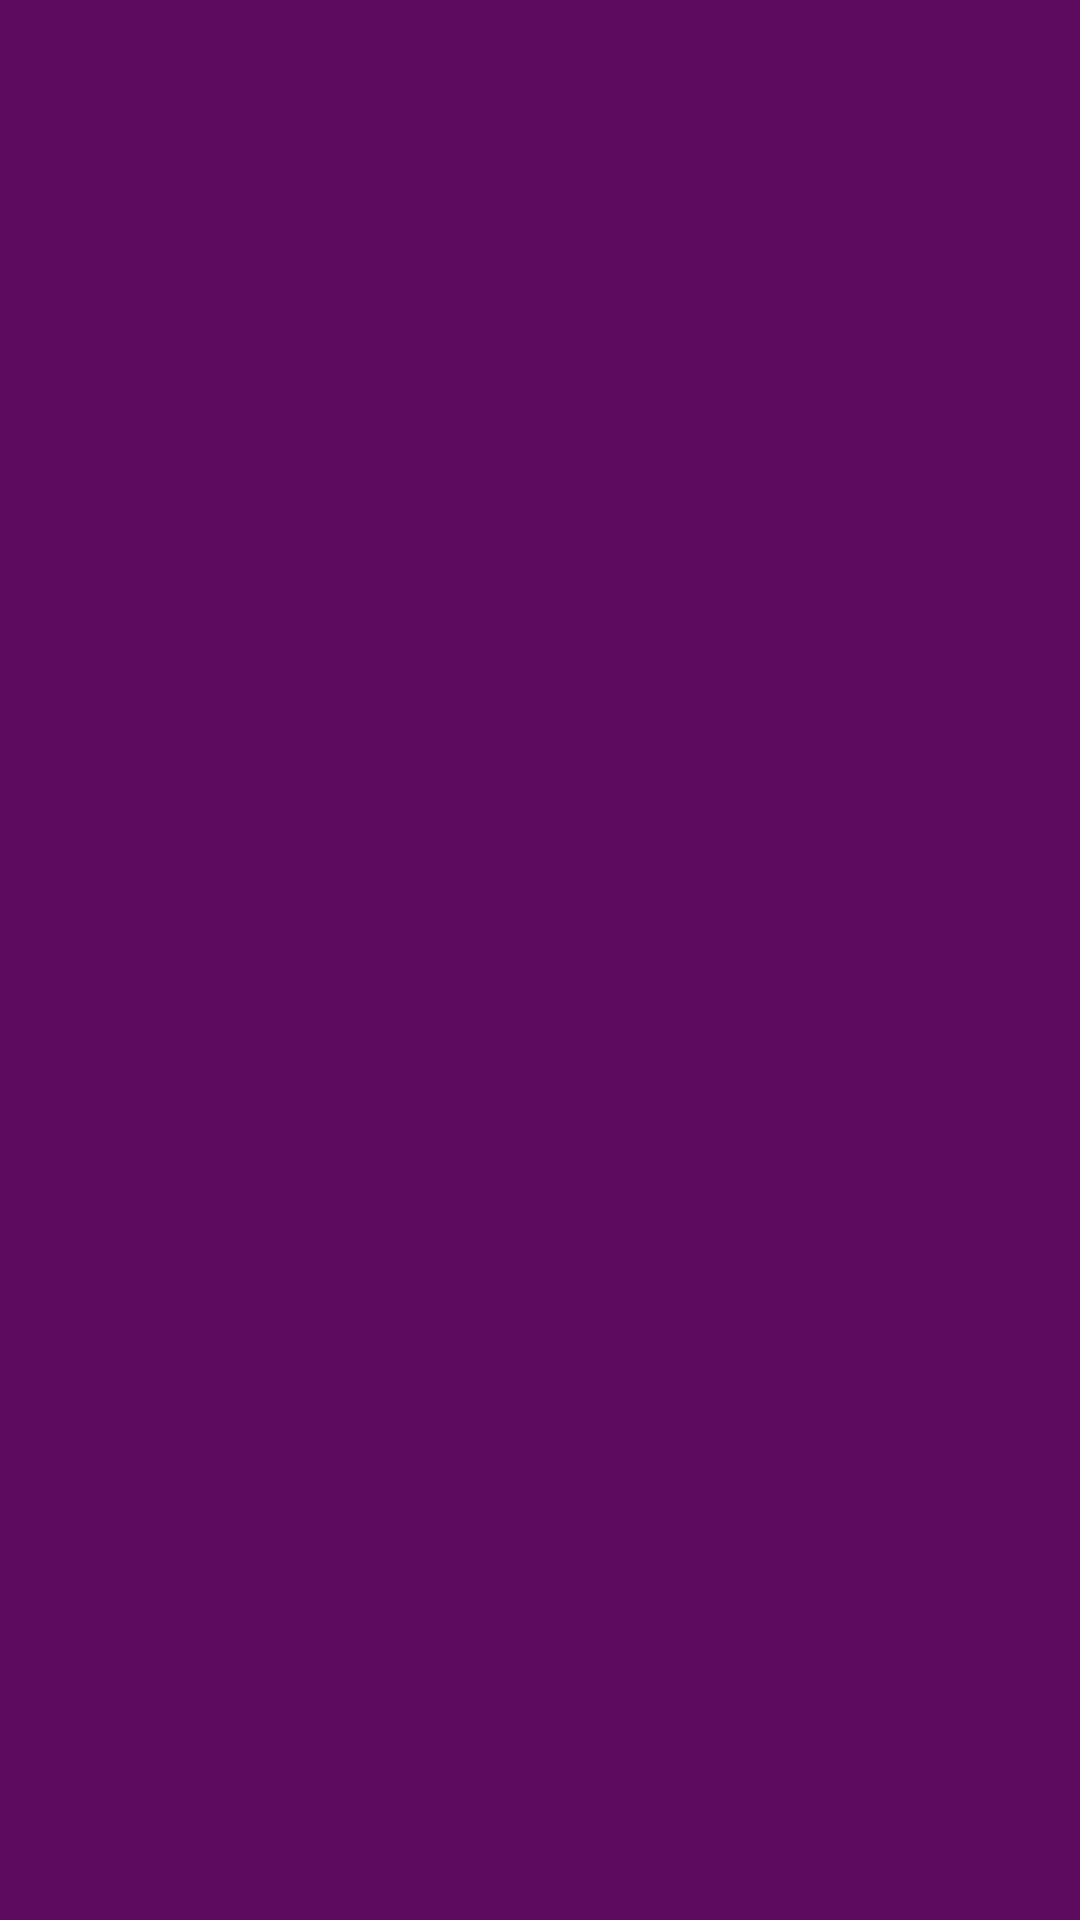 Solid Background Dark Purple Color Wallpaper